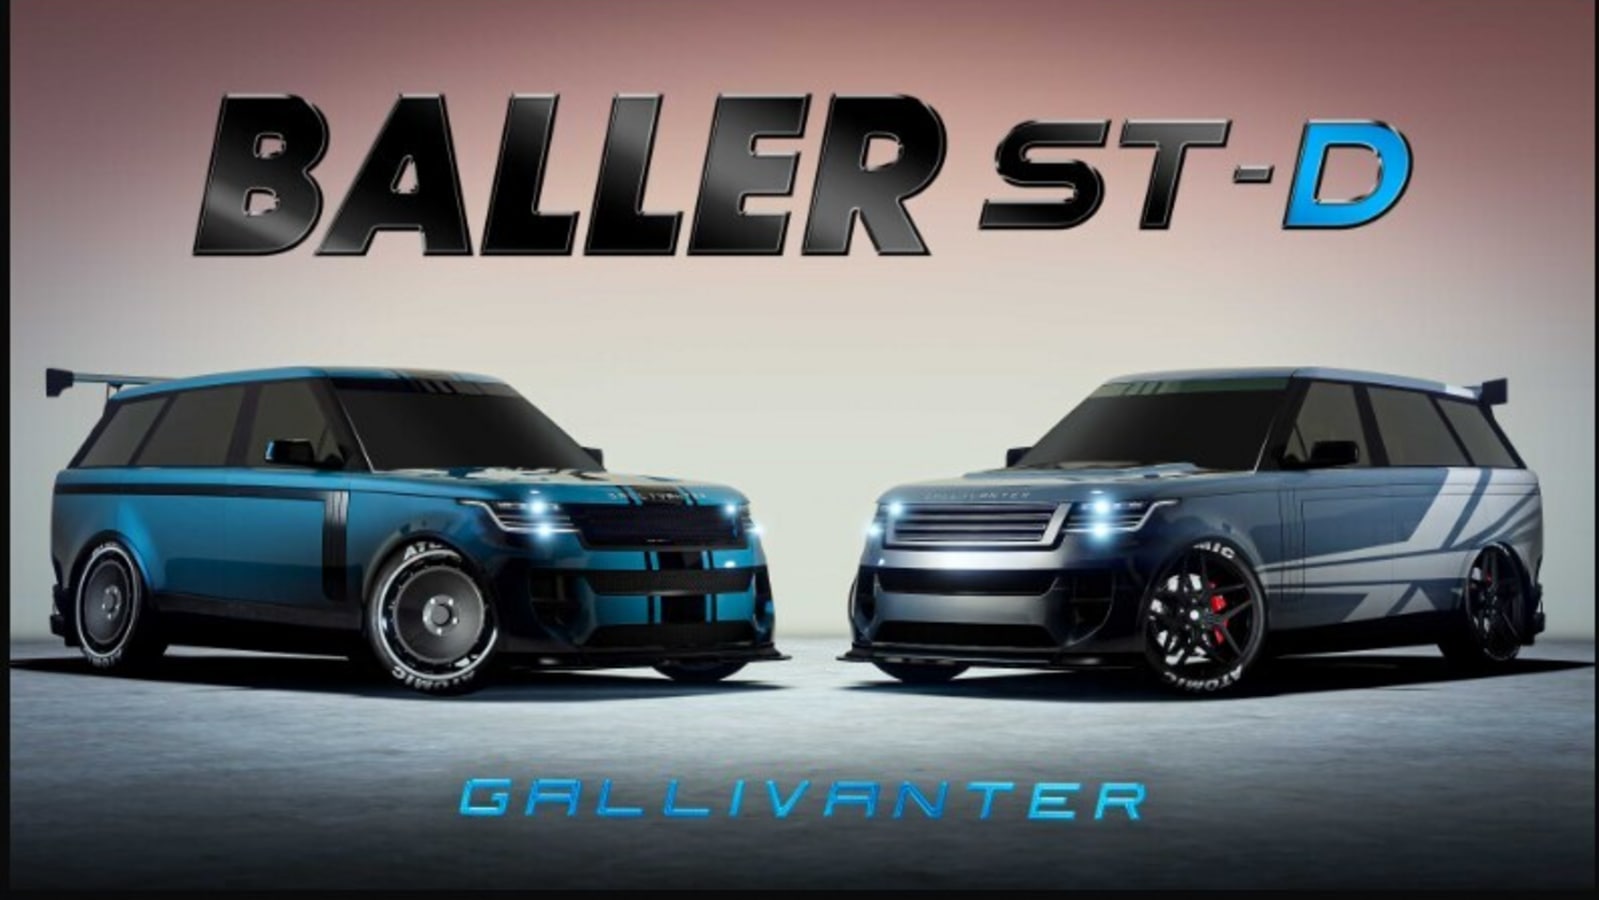 Rockstar Games introduces Gallivanter Baller ST-D SUV to GTA Online in latest update